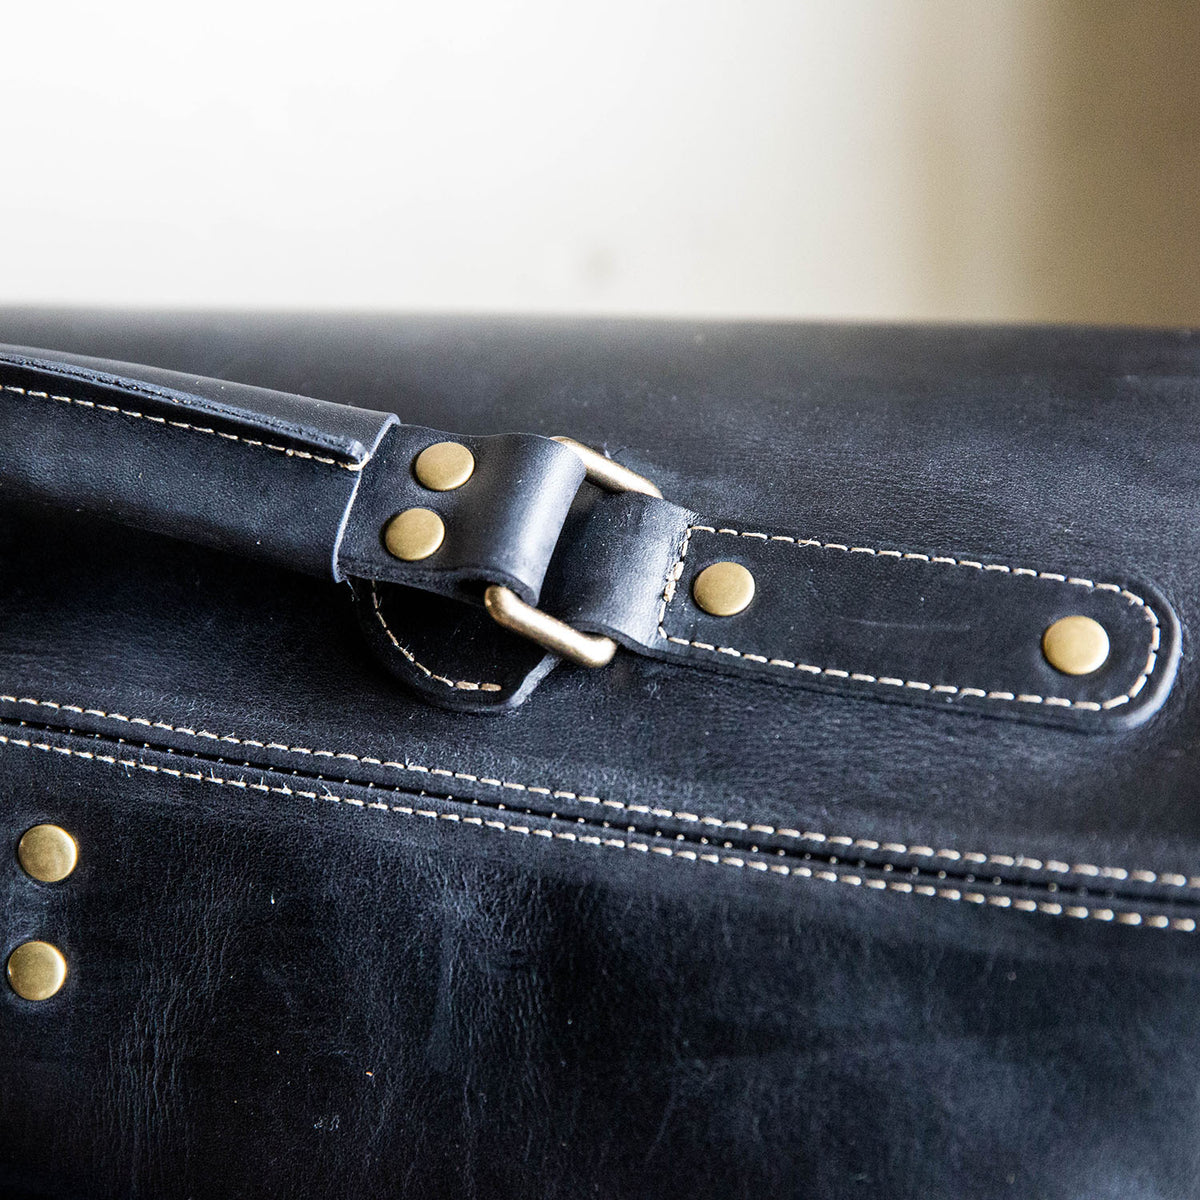 The No. 1860 EXPRESS - Fine Leather Messenger Bag &amp; Mens Briefcase